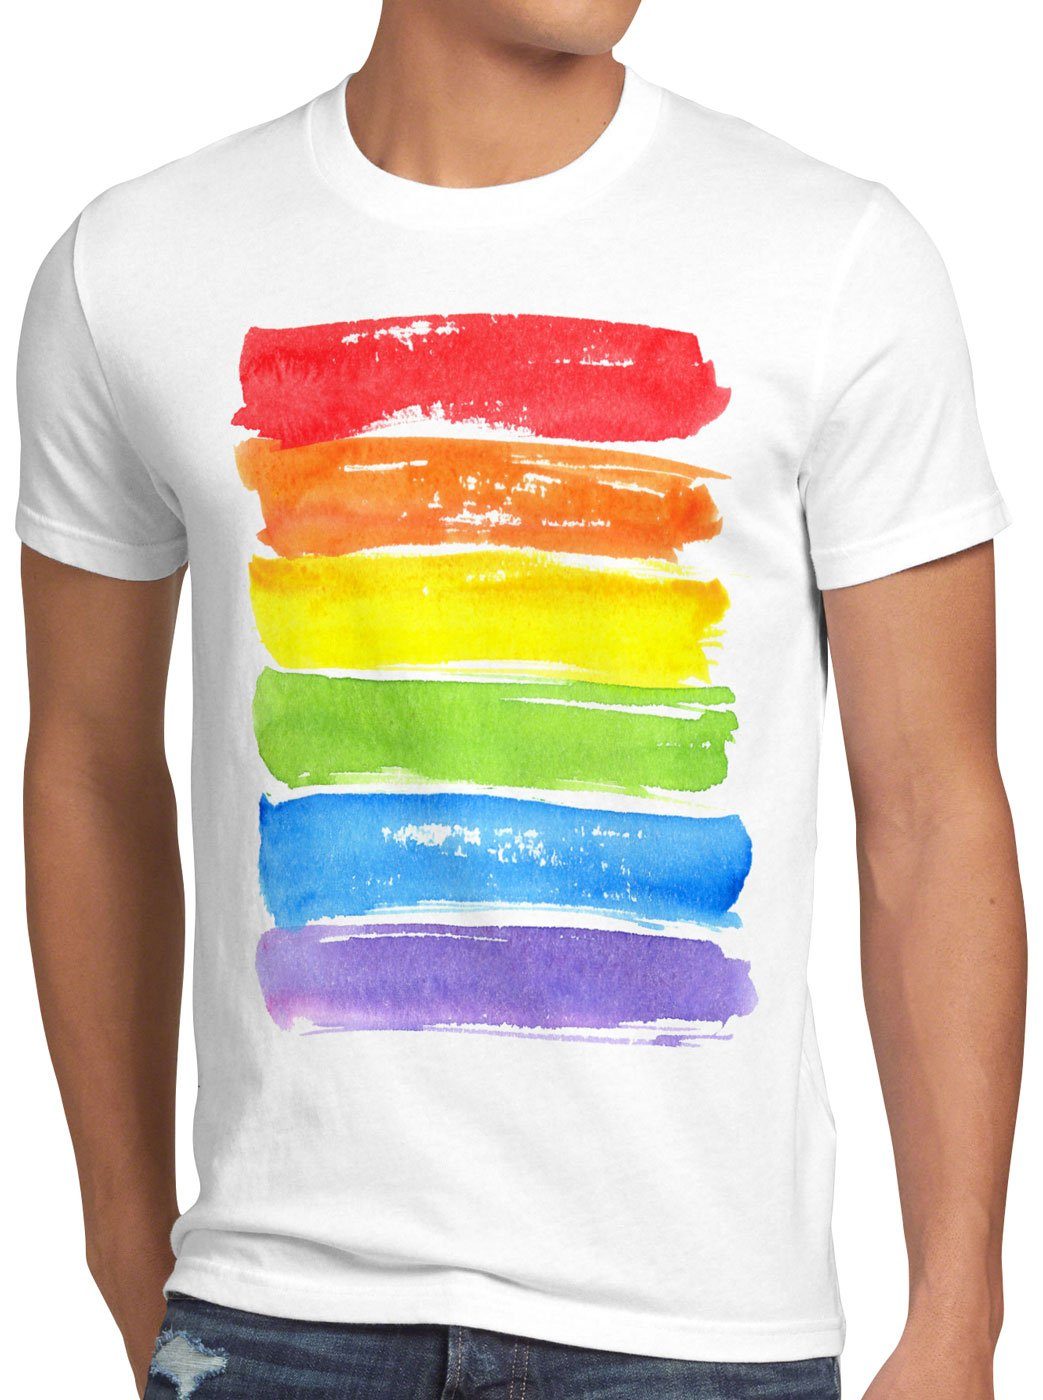 Print-Shirt liebe Regenbogenflagge T-Shirt Herren toleranz lgbt style3